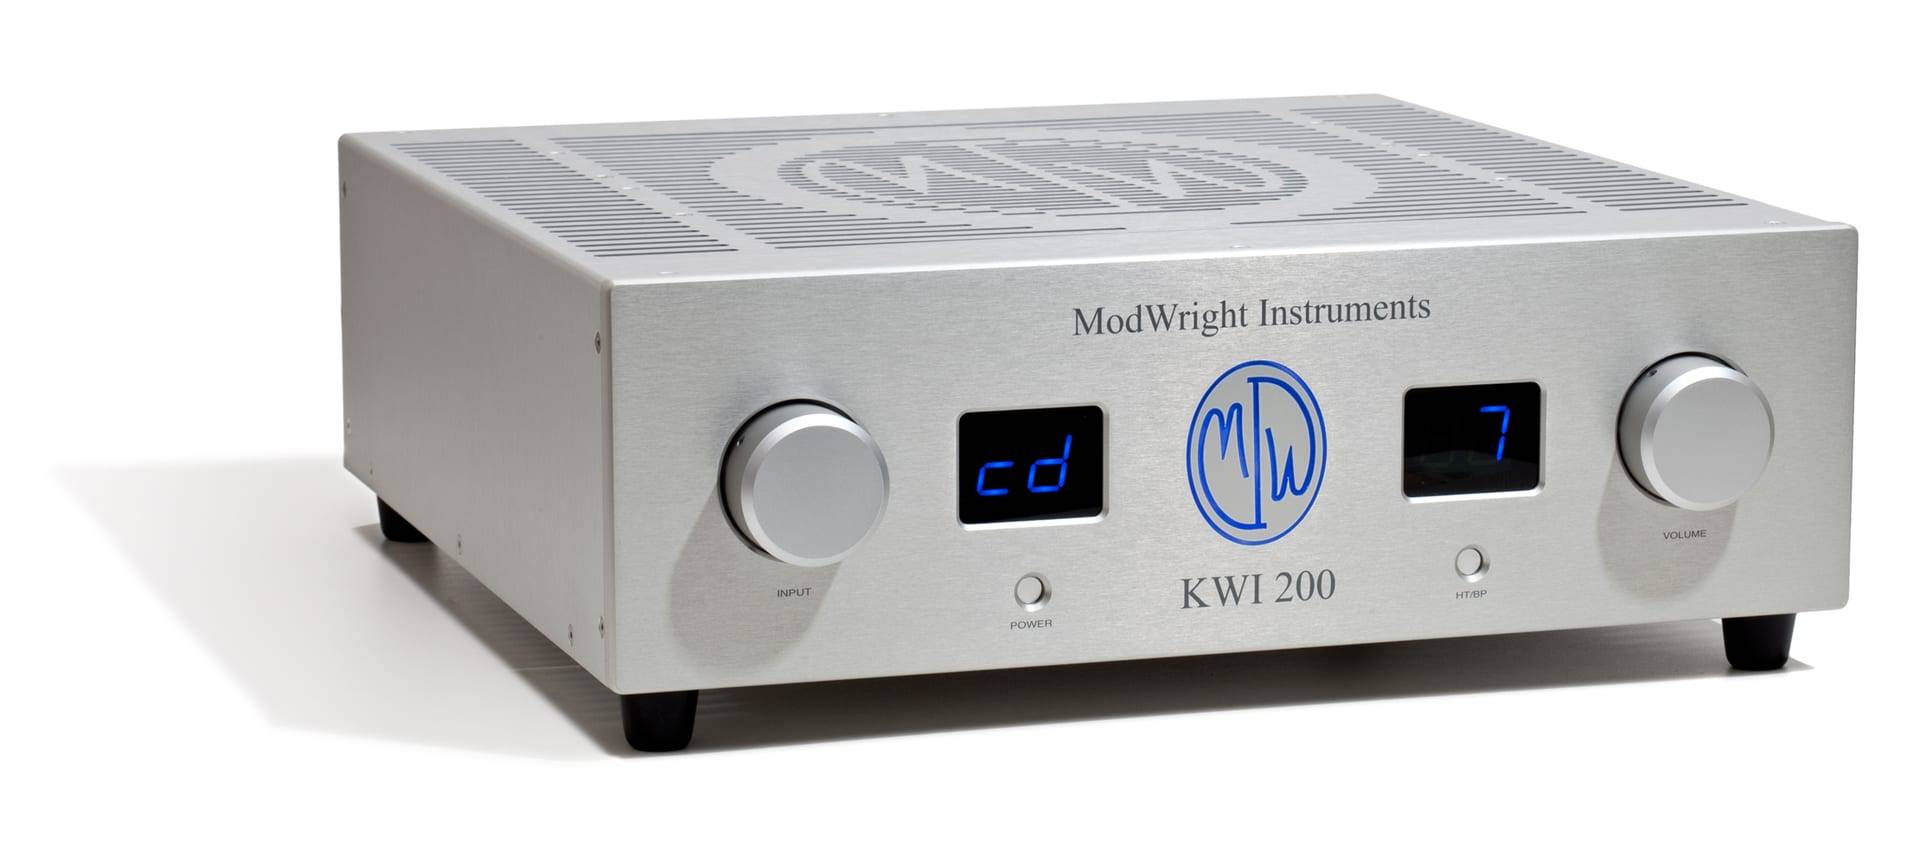 Modwright Instruments KWI 200